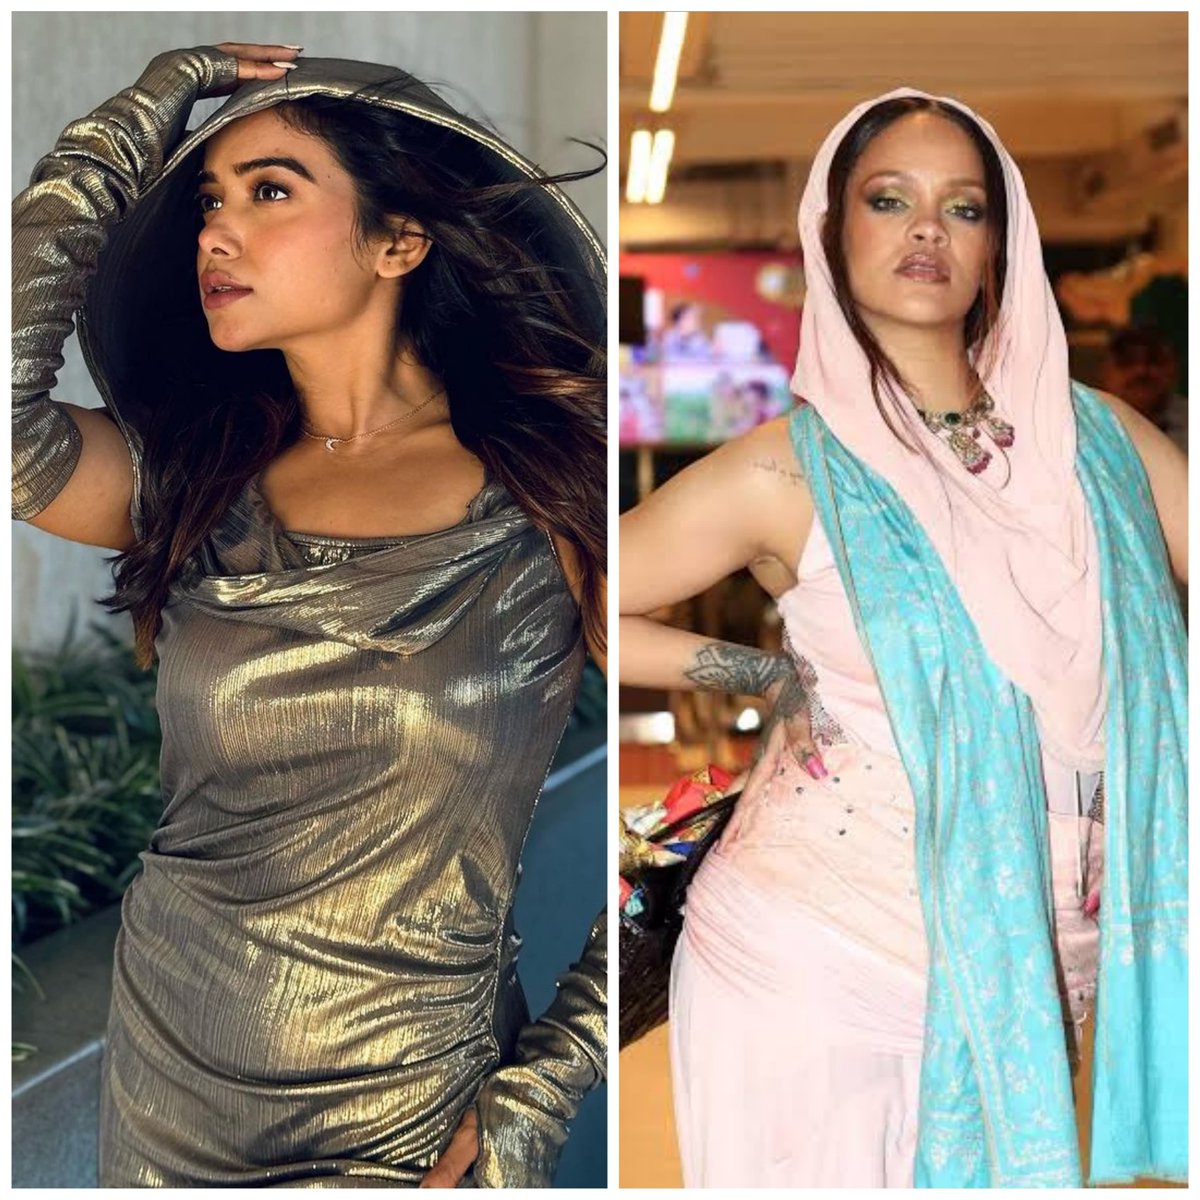 Two style icons, one chic look.. Who rocked it best? @manisharani002 vs. #rihanna😍 #manisharani #rihanna